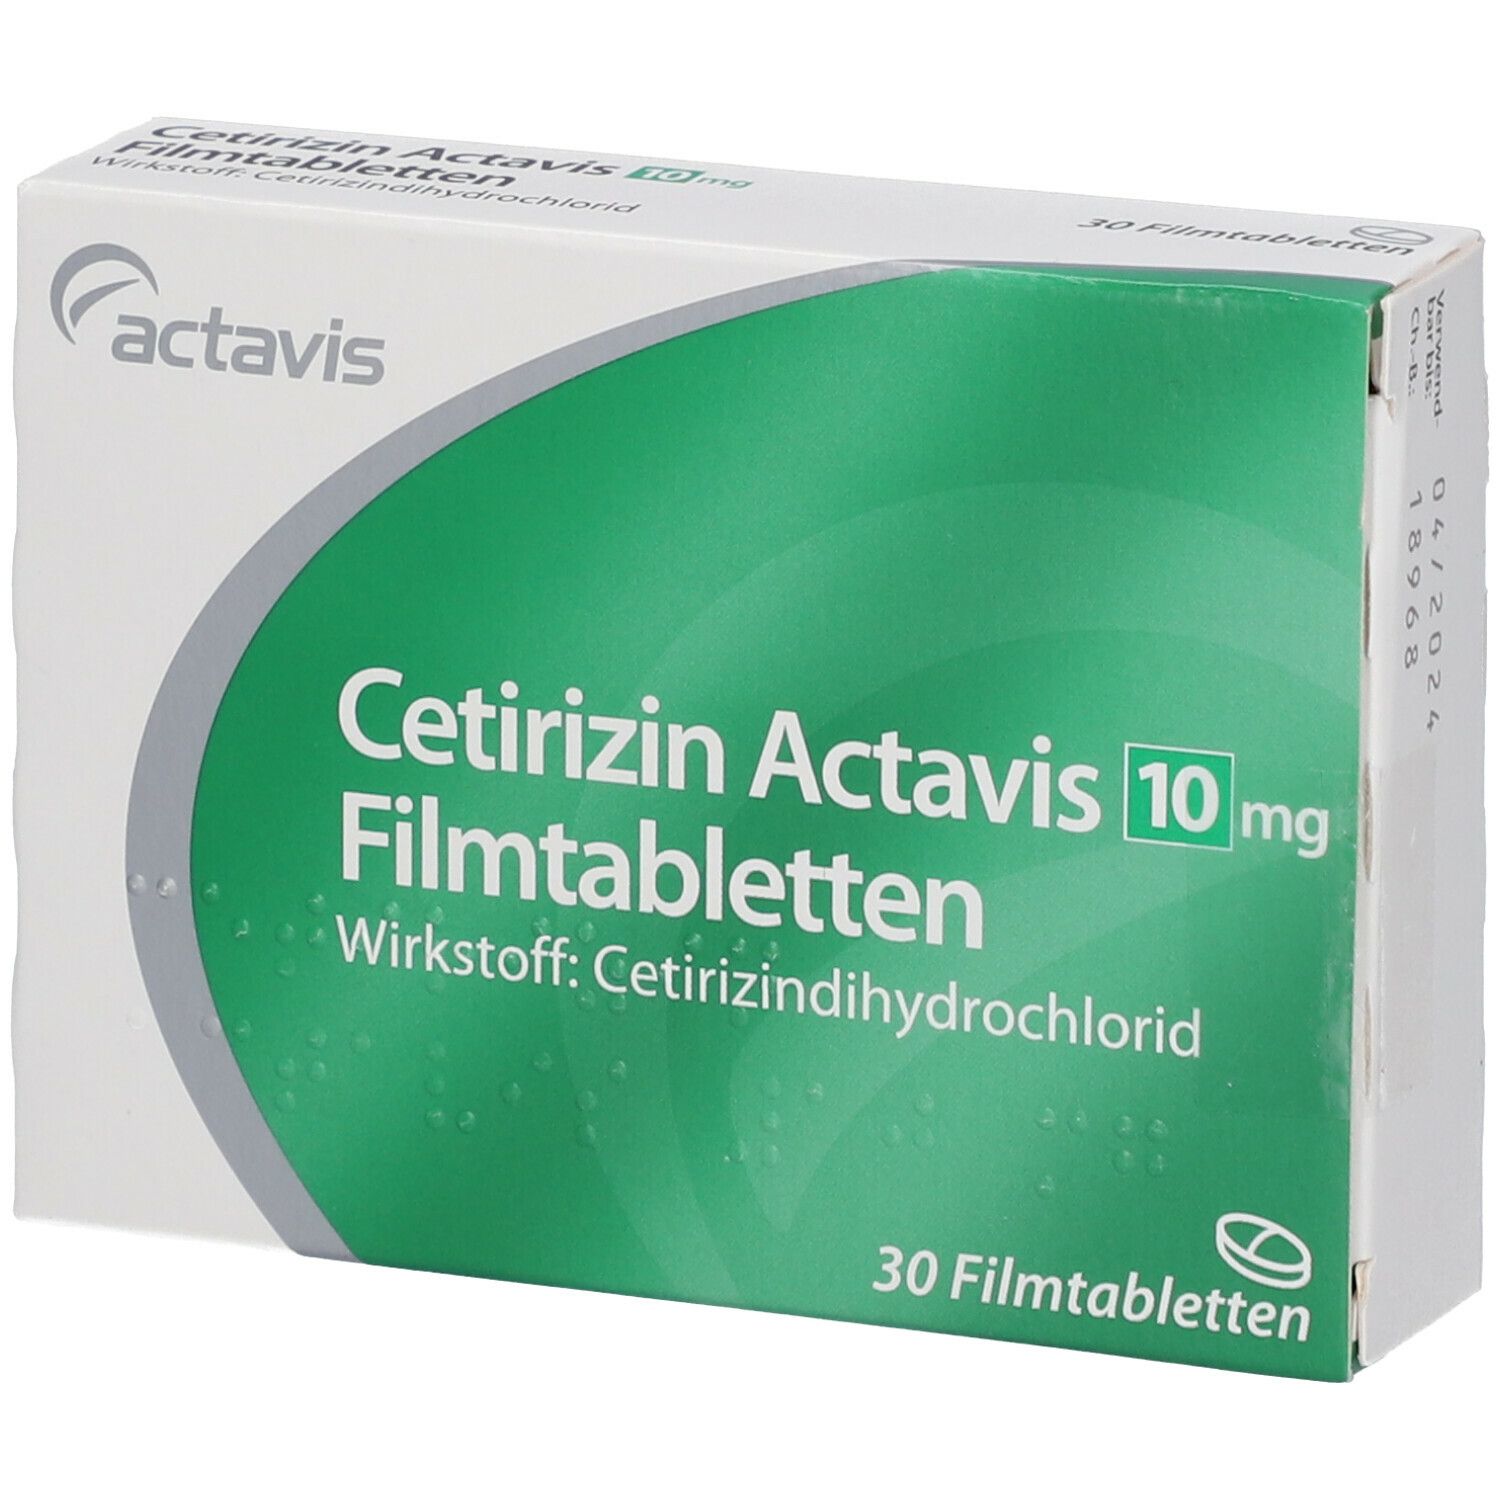 Cetirizin Actavis 10 mg